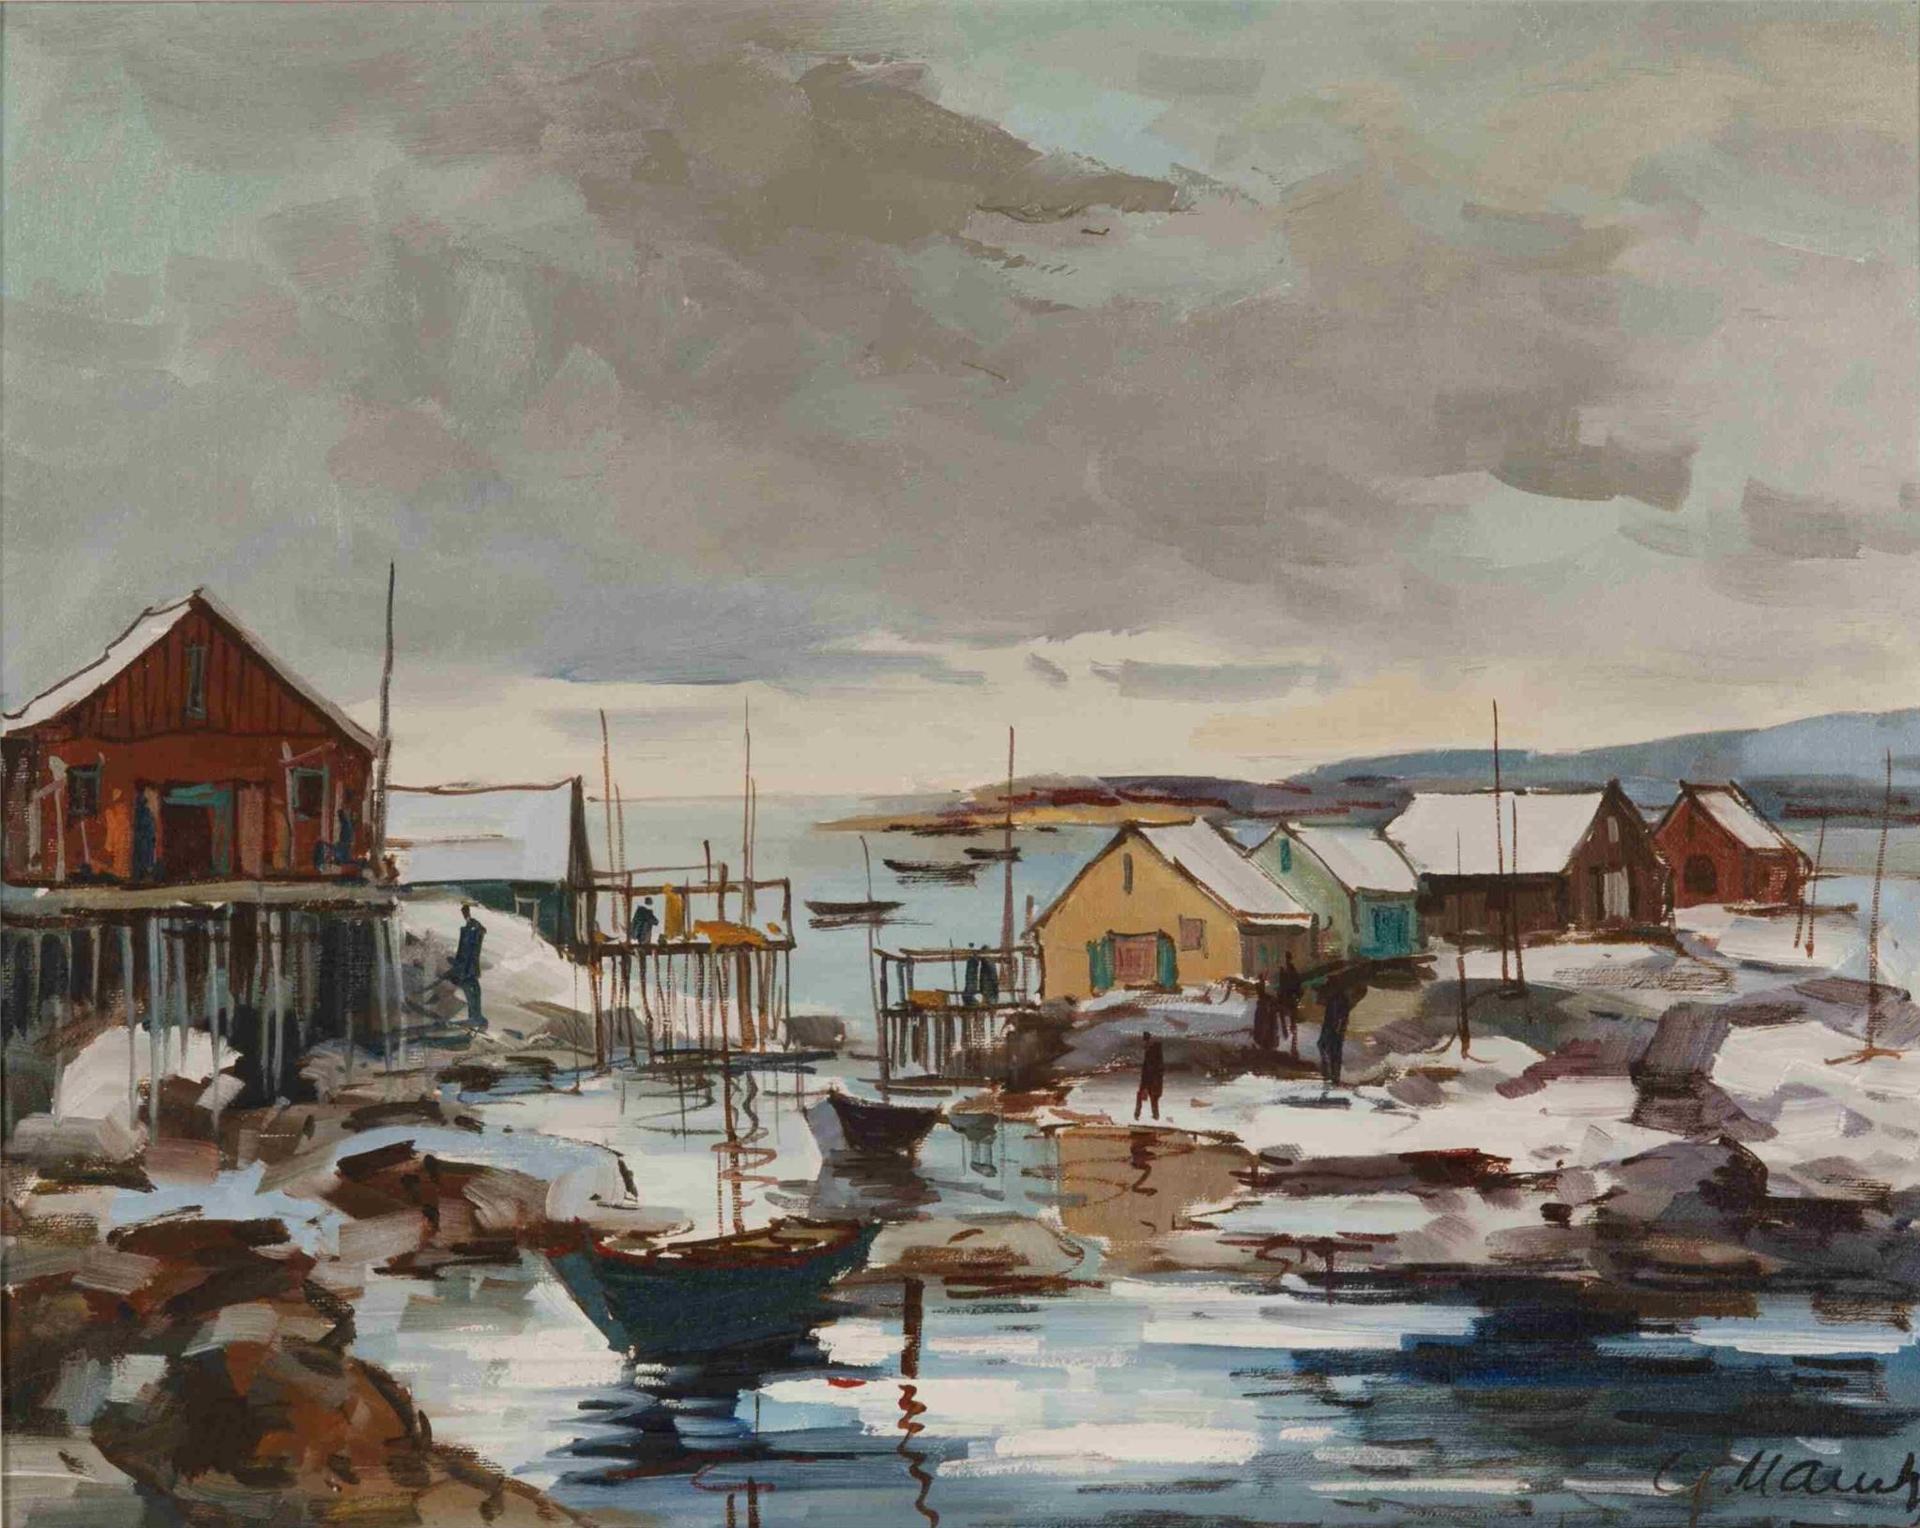 Geza (Gordon) Marich (1913-1985) - Fishing Wharf